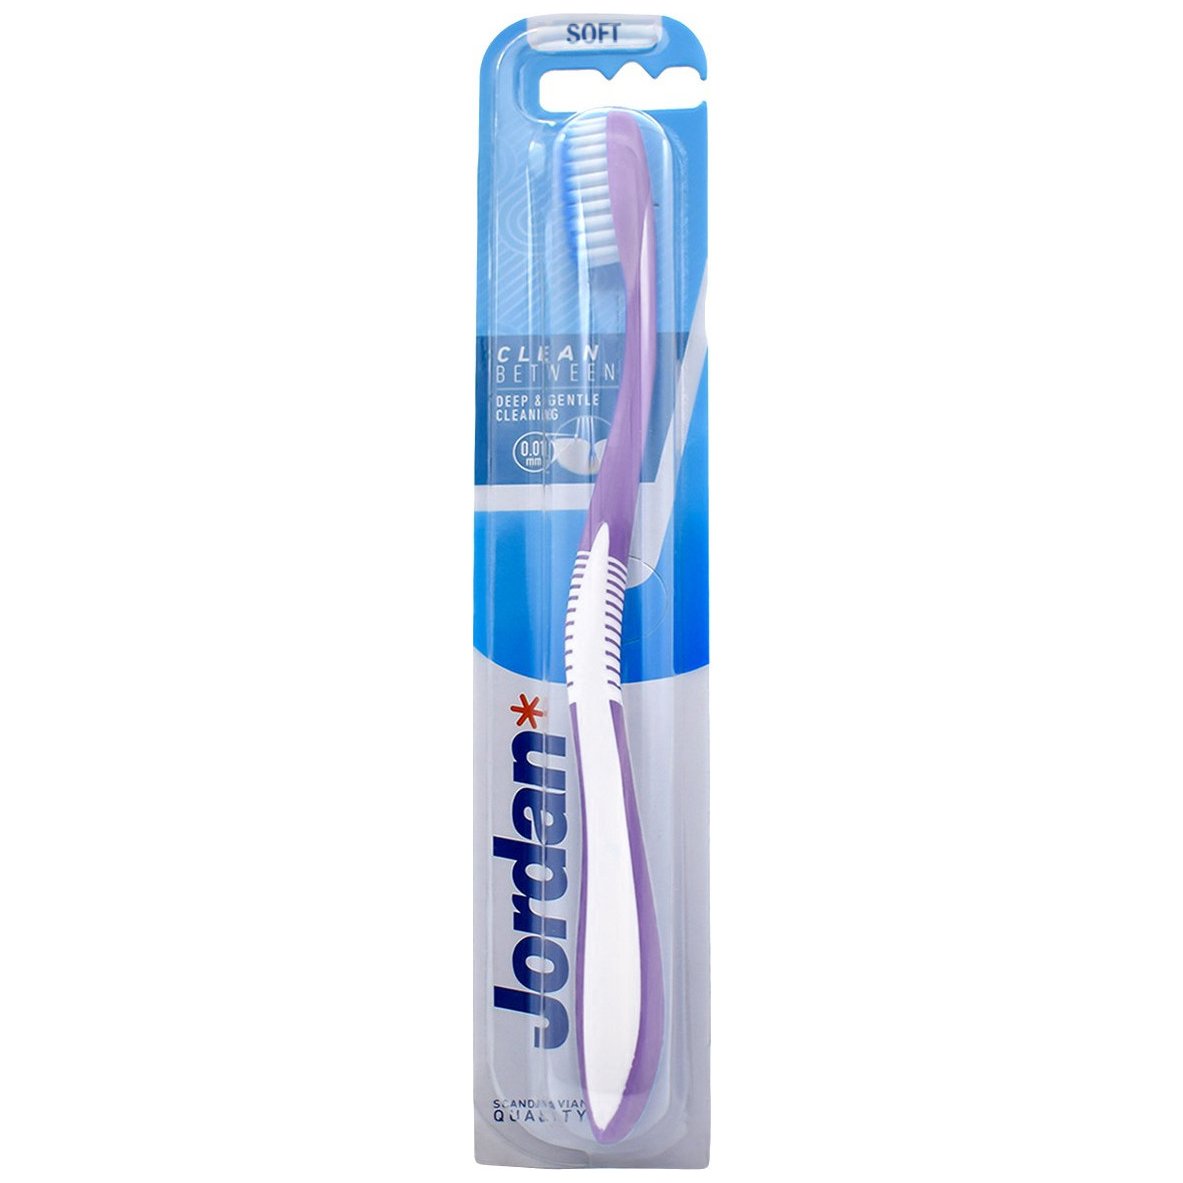 Jordan Clean Between Toothbrush Soft 0.01mm Μαλακή Οδοντόβουρτσα για Βαθύ Καθαρισμό με Εξαιρετικά Λεπτές Ίνες 1 Τεμάχιο, Κωδ 310036 – Μωβ